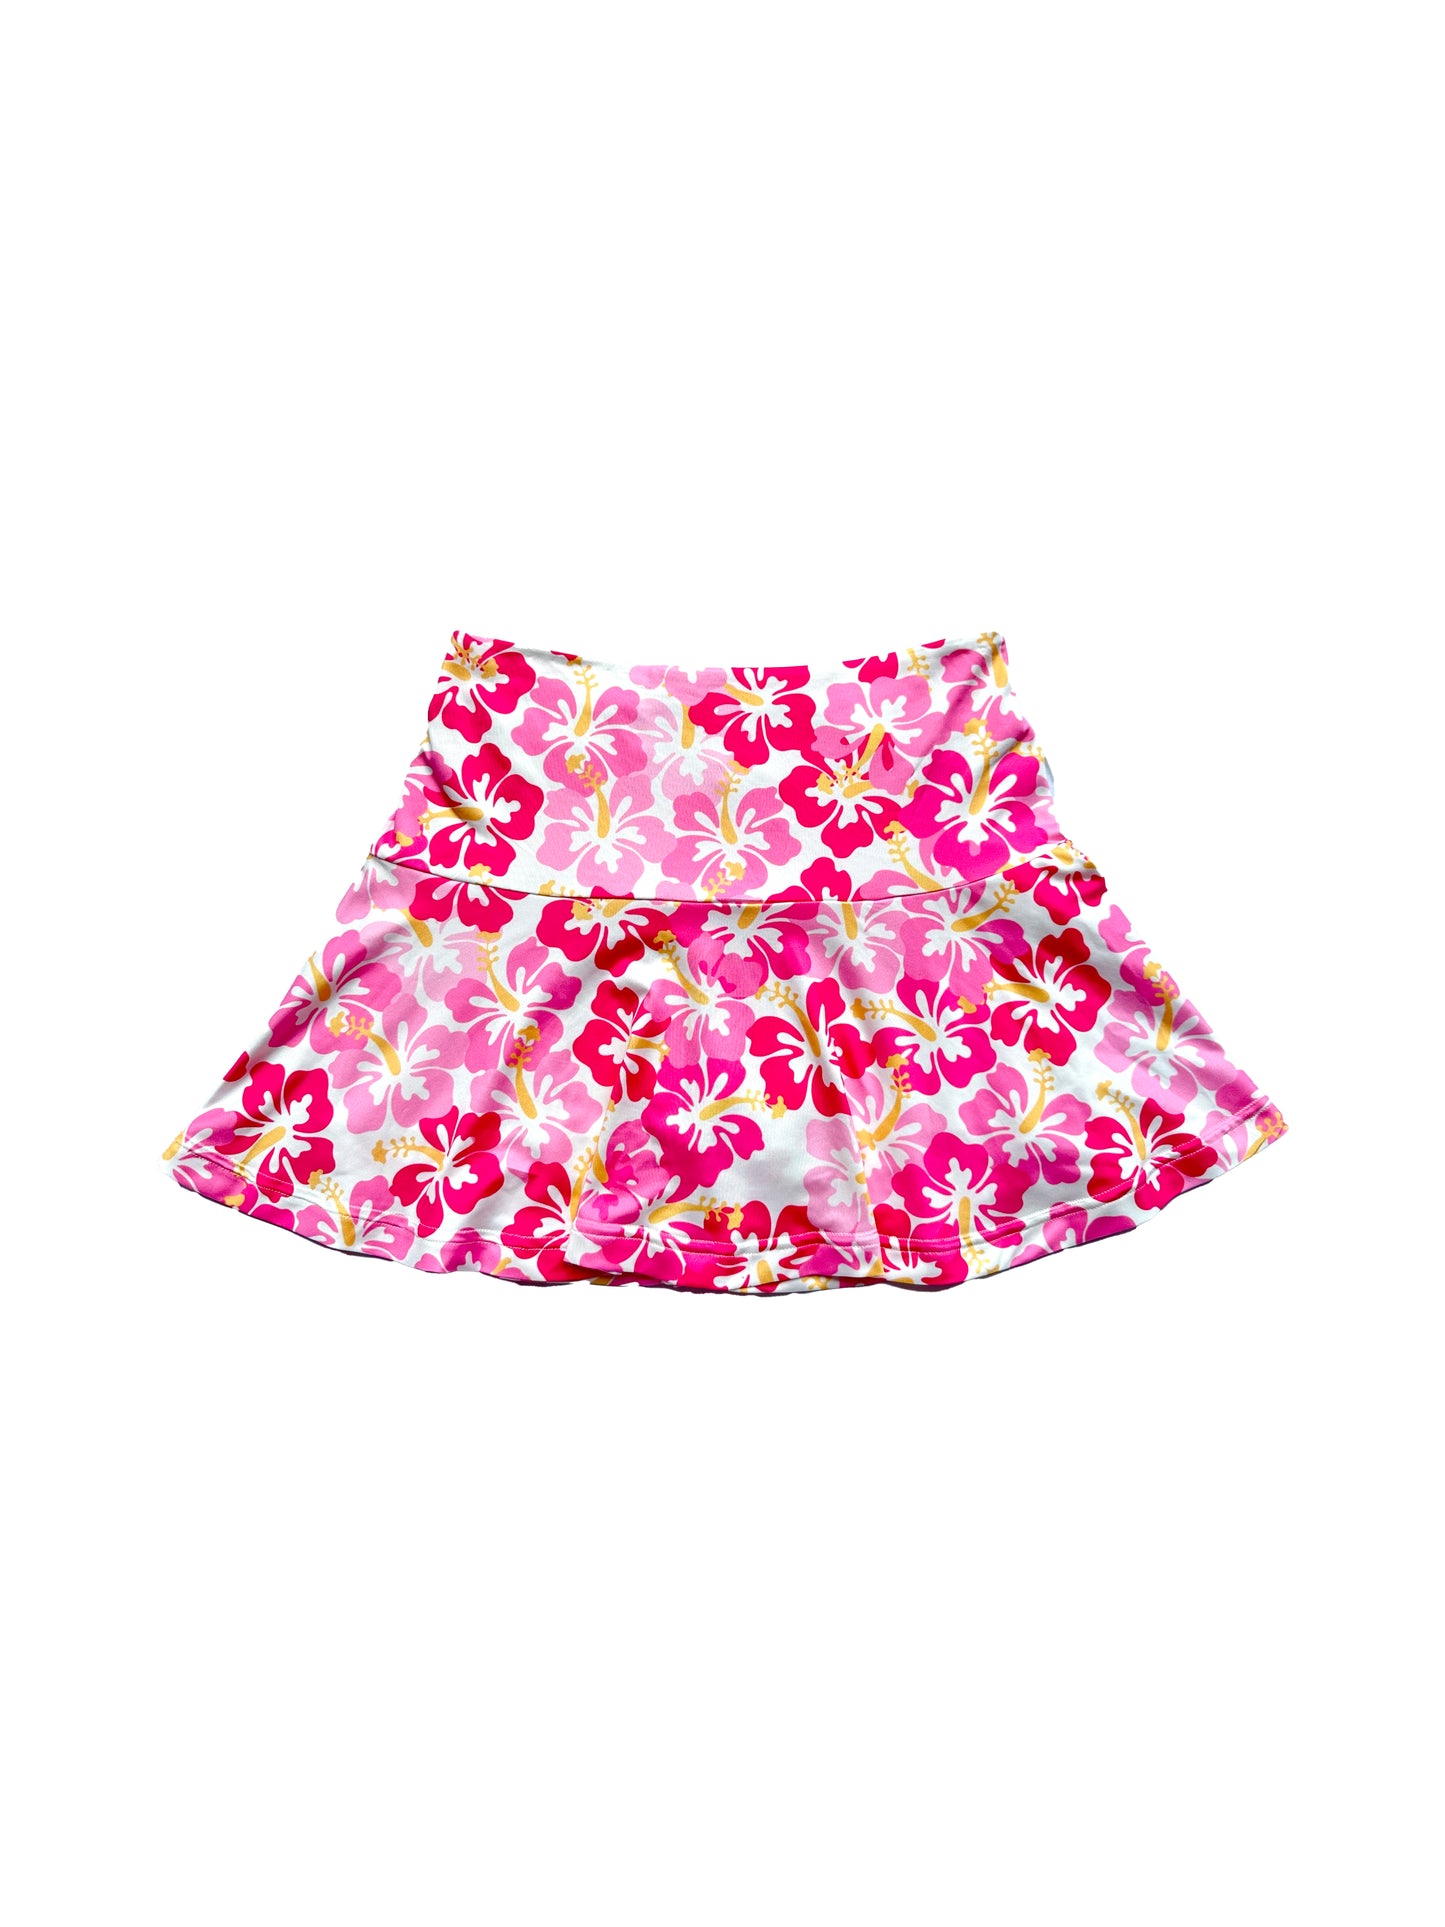 ArtByTastybabe Summer Floral Set(Camisole+Skirt)